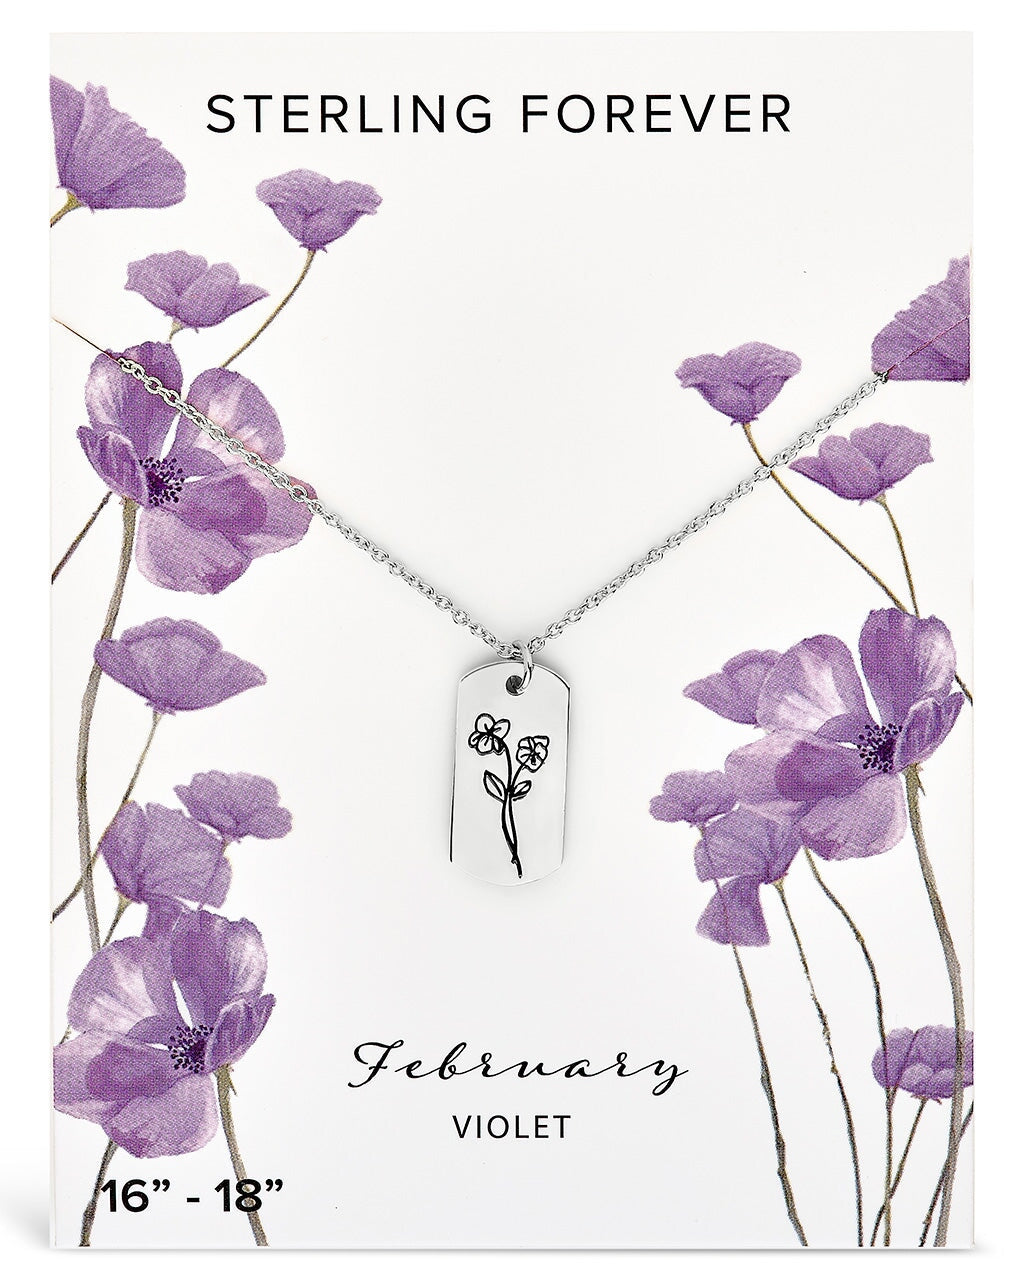 Birth Flower Pendant Necklace Sterling Forever 